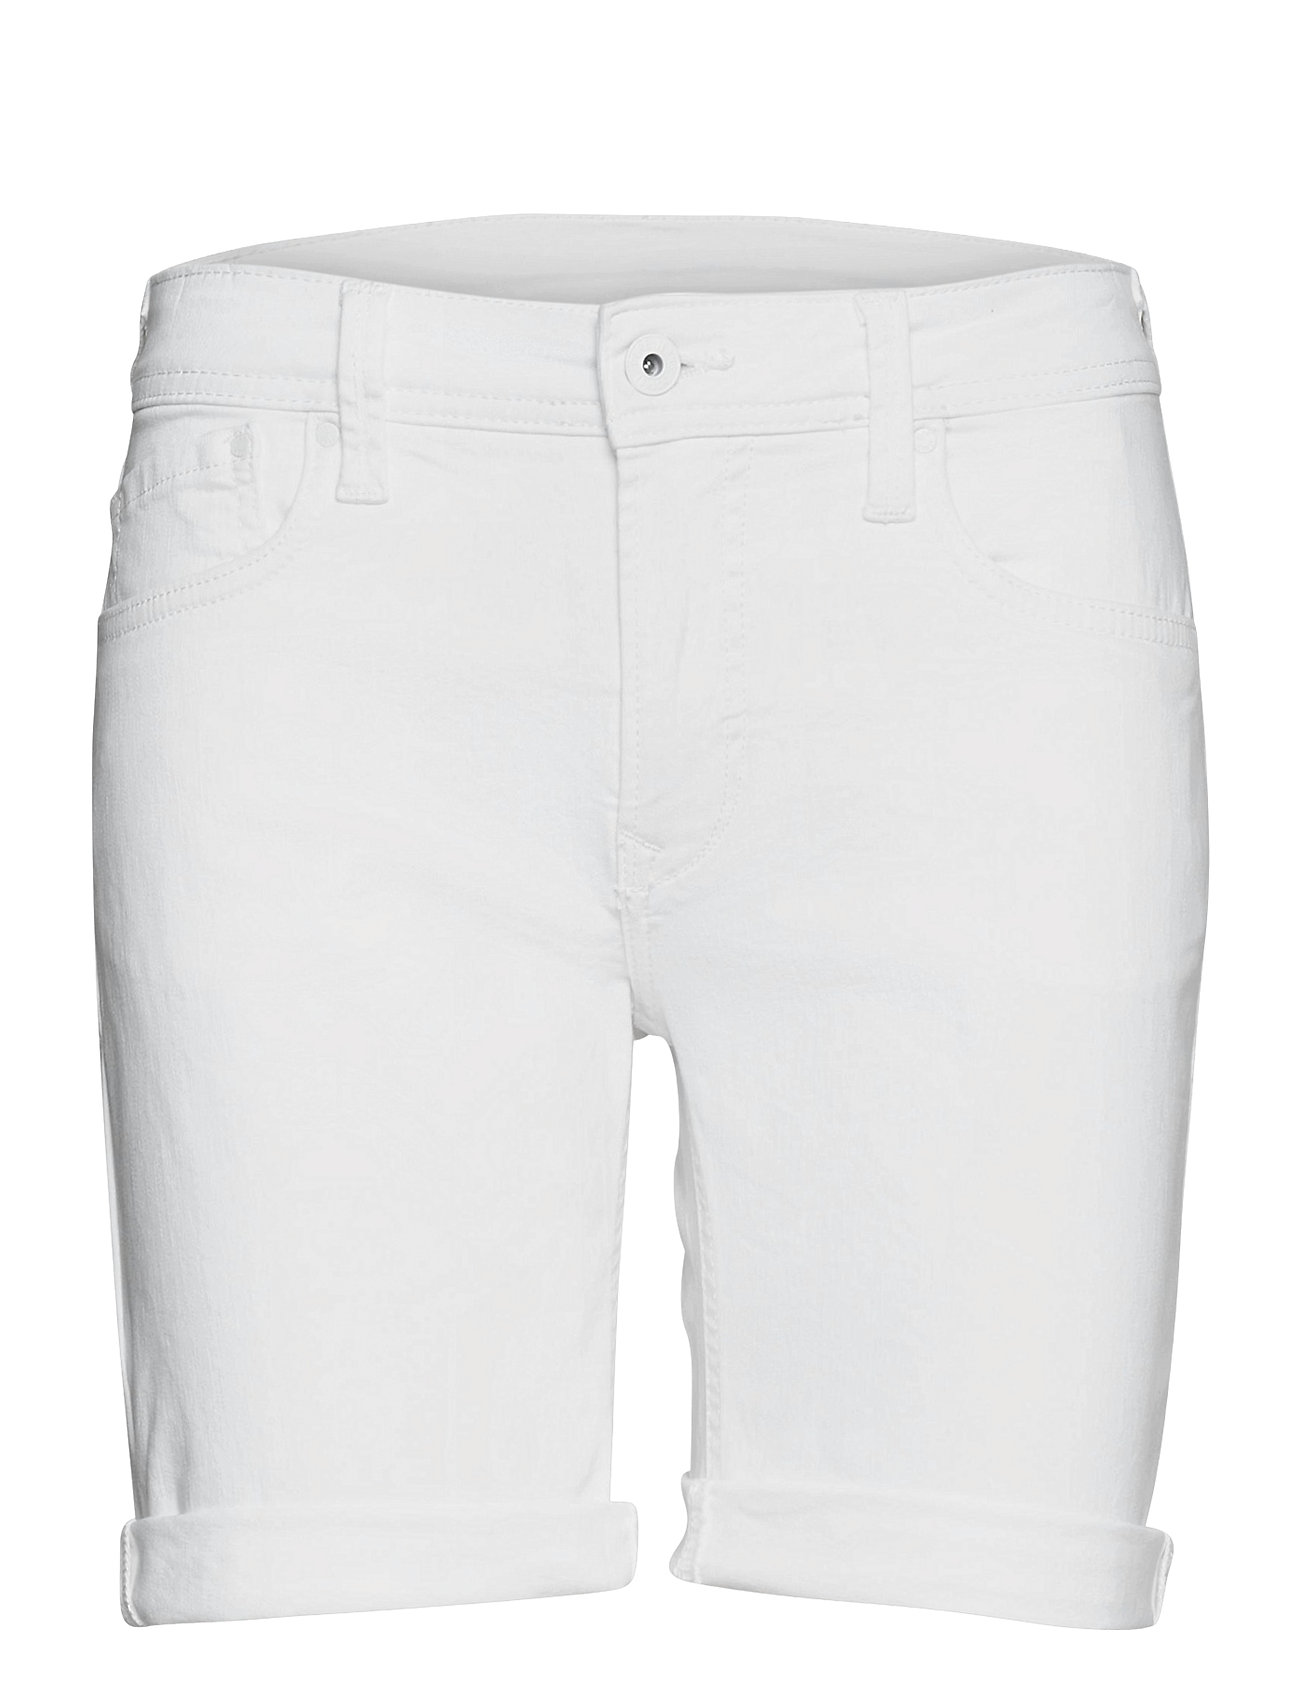 Poppy Shorts Denim Shorts Valkoinen Pepe Jeans London